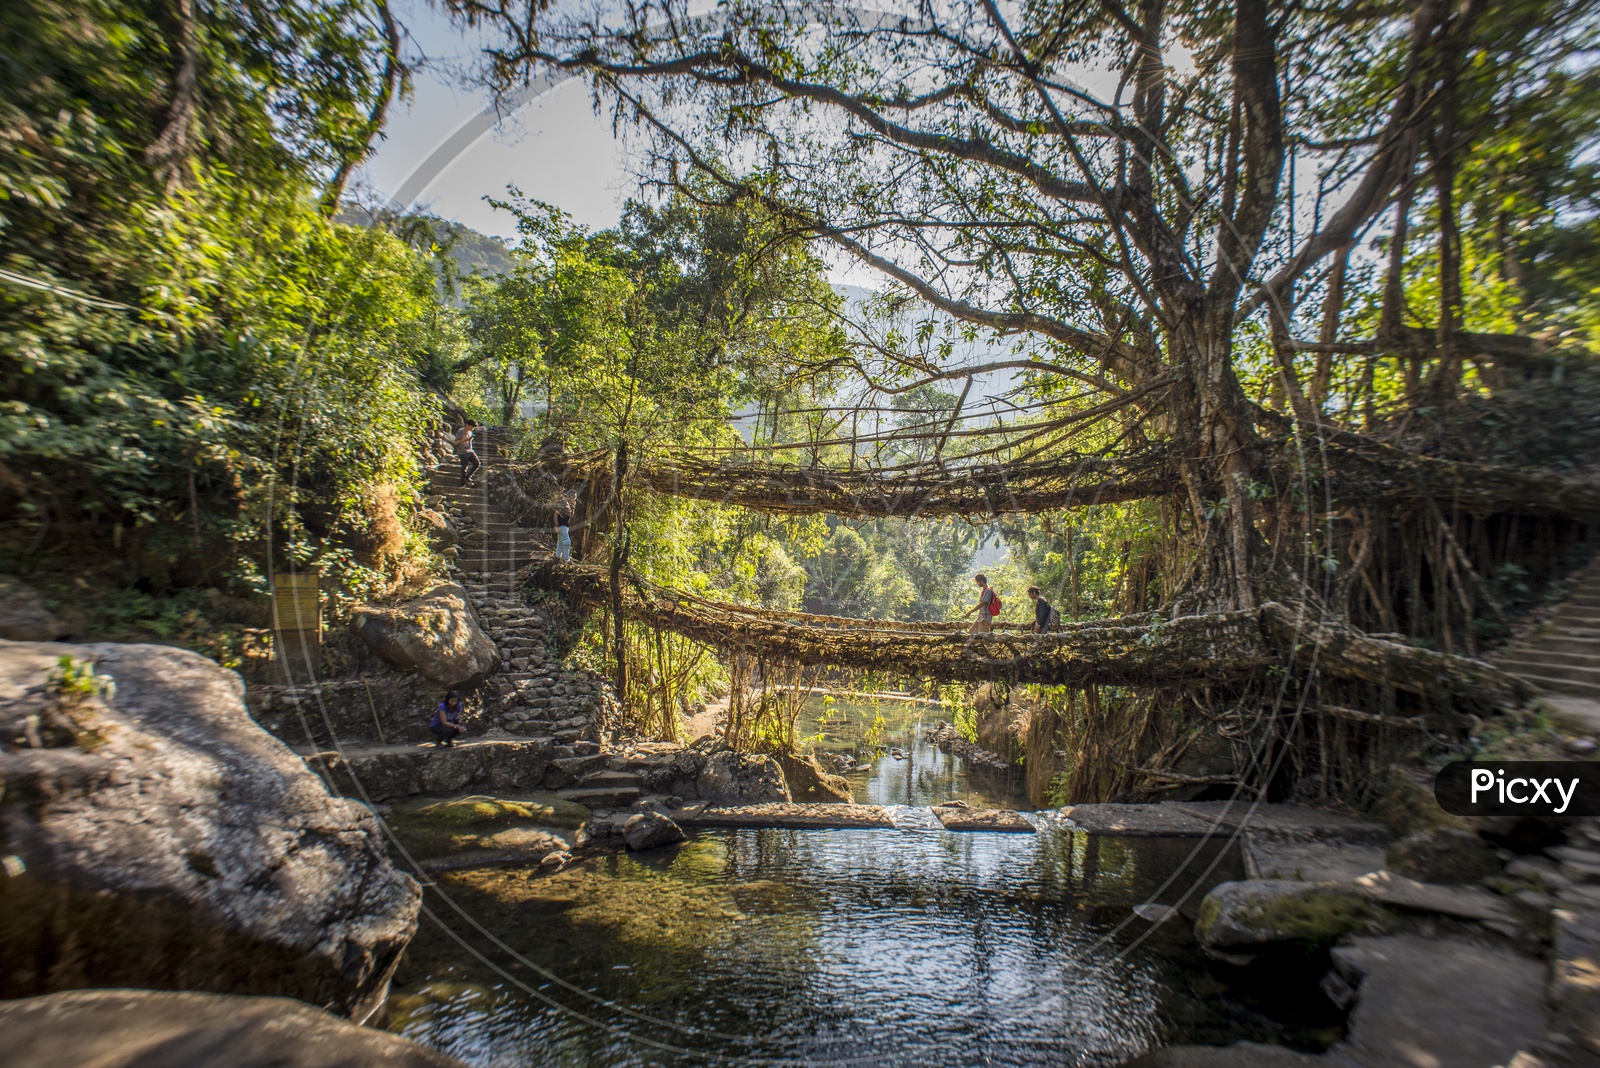 Double Decker living root bridge at Nongriat Village, Meghalaya